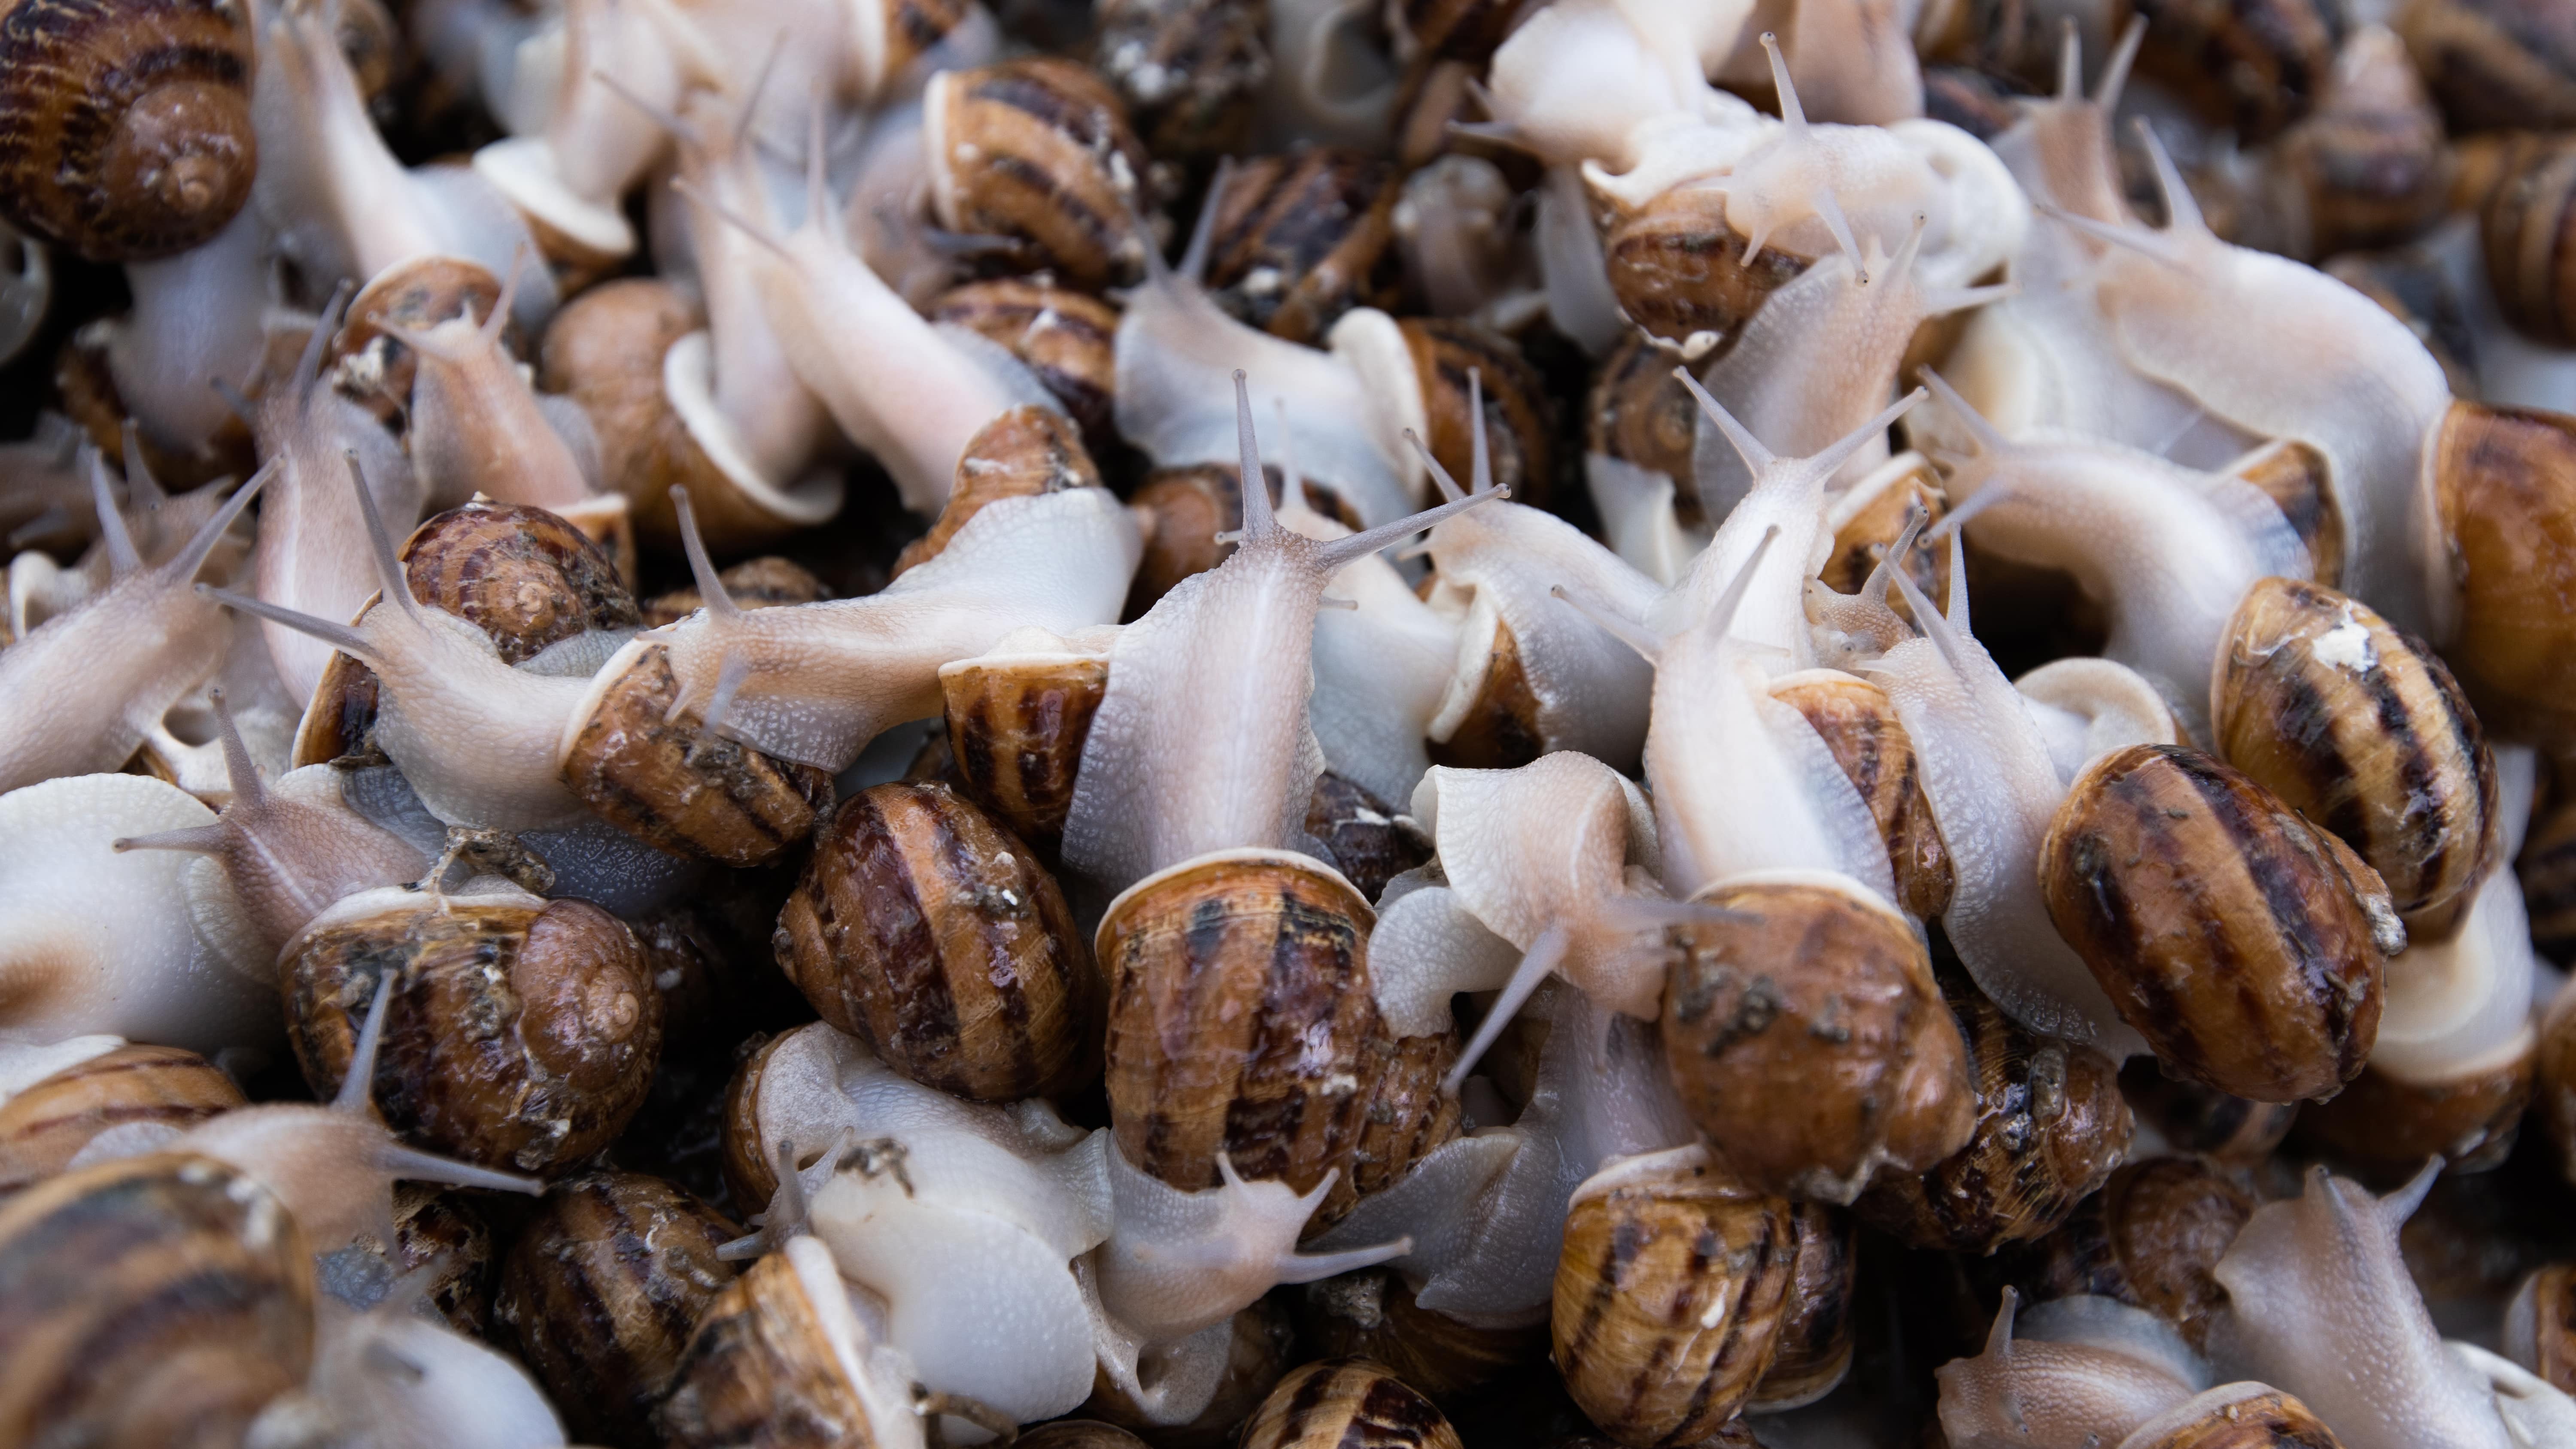 snail rearing business plan in nigeria